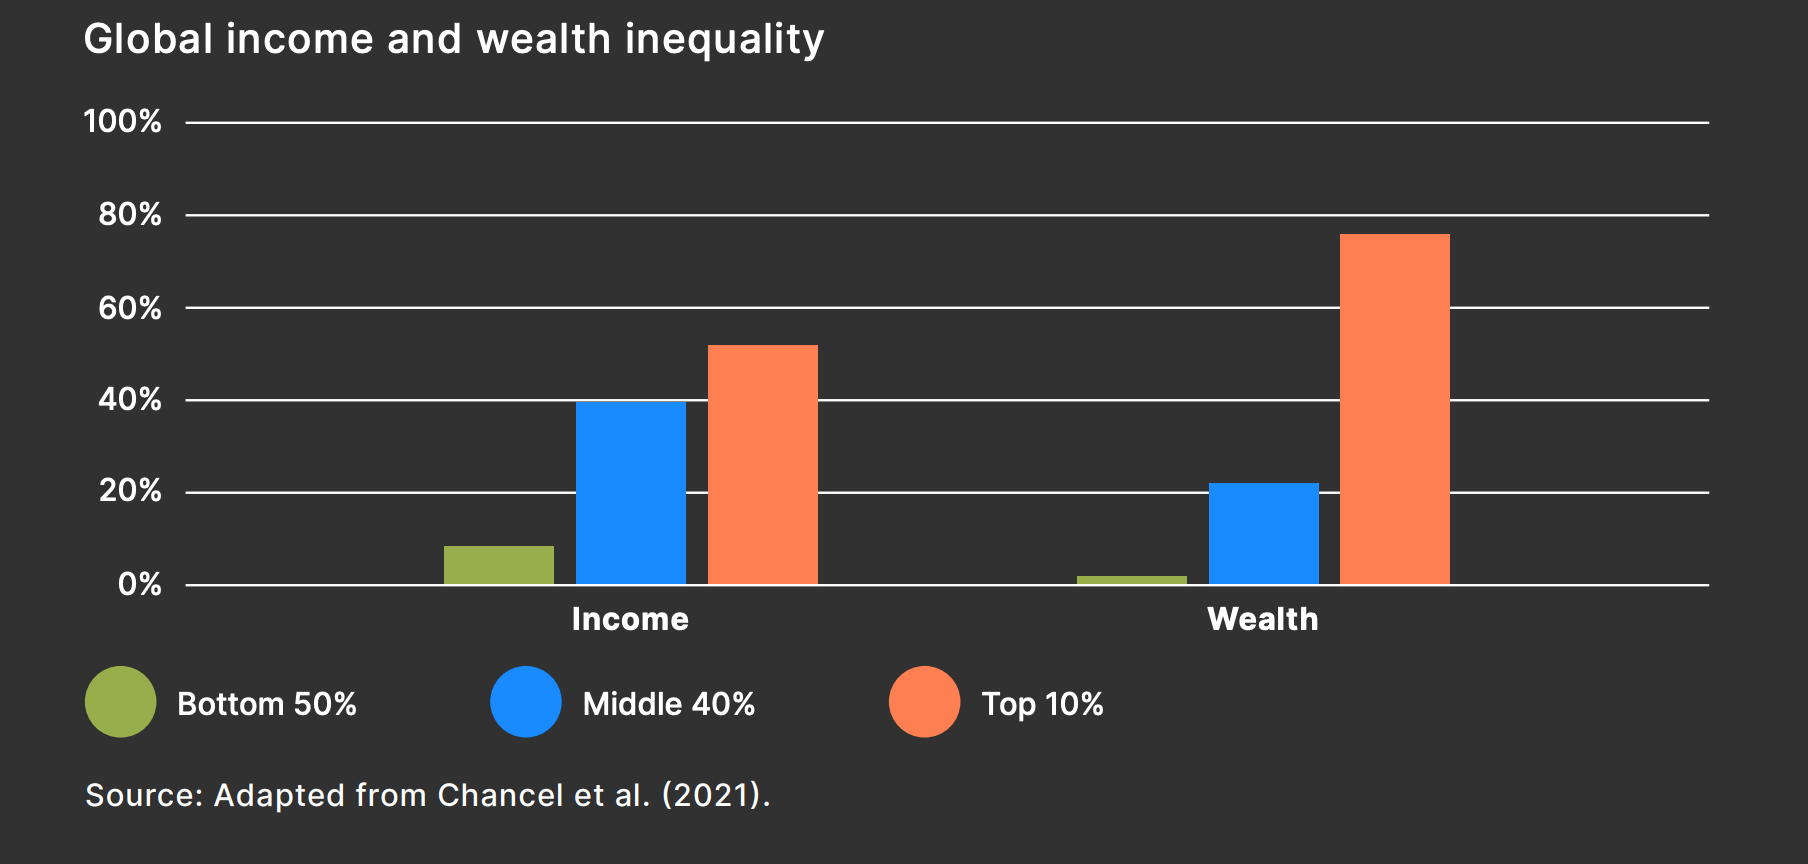 Global income and wealth inequality